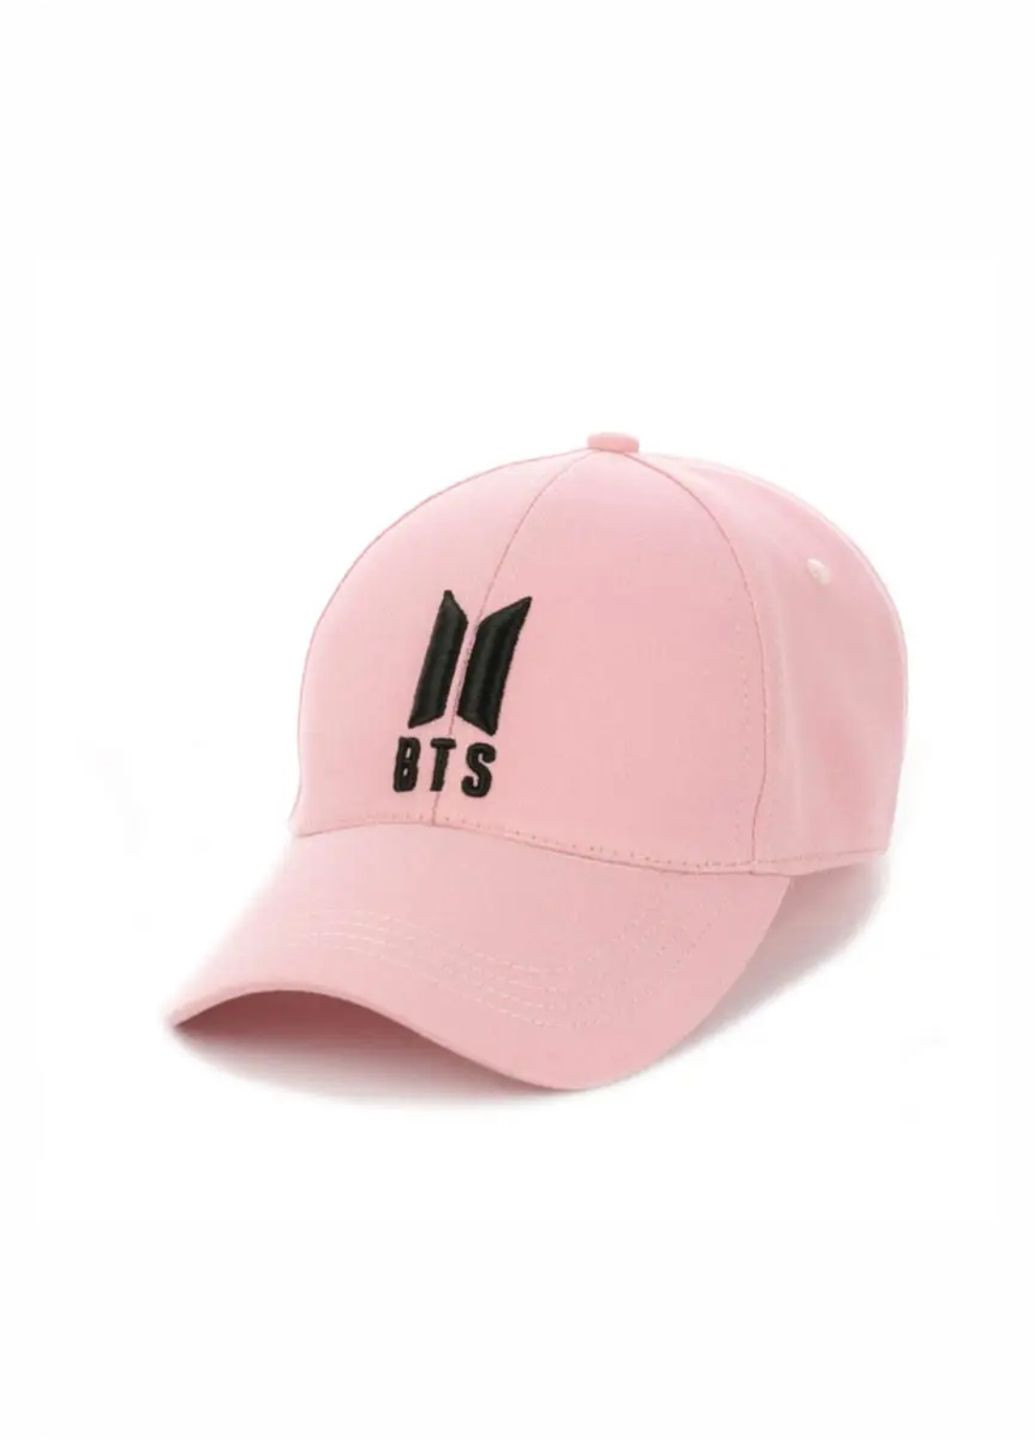 Женская кепка БТС / BTS S/M No Brand кепка жіноча (279381267)